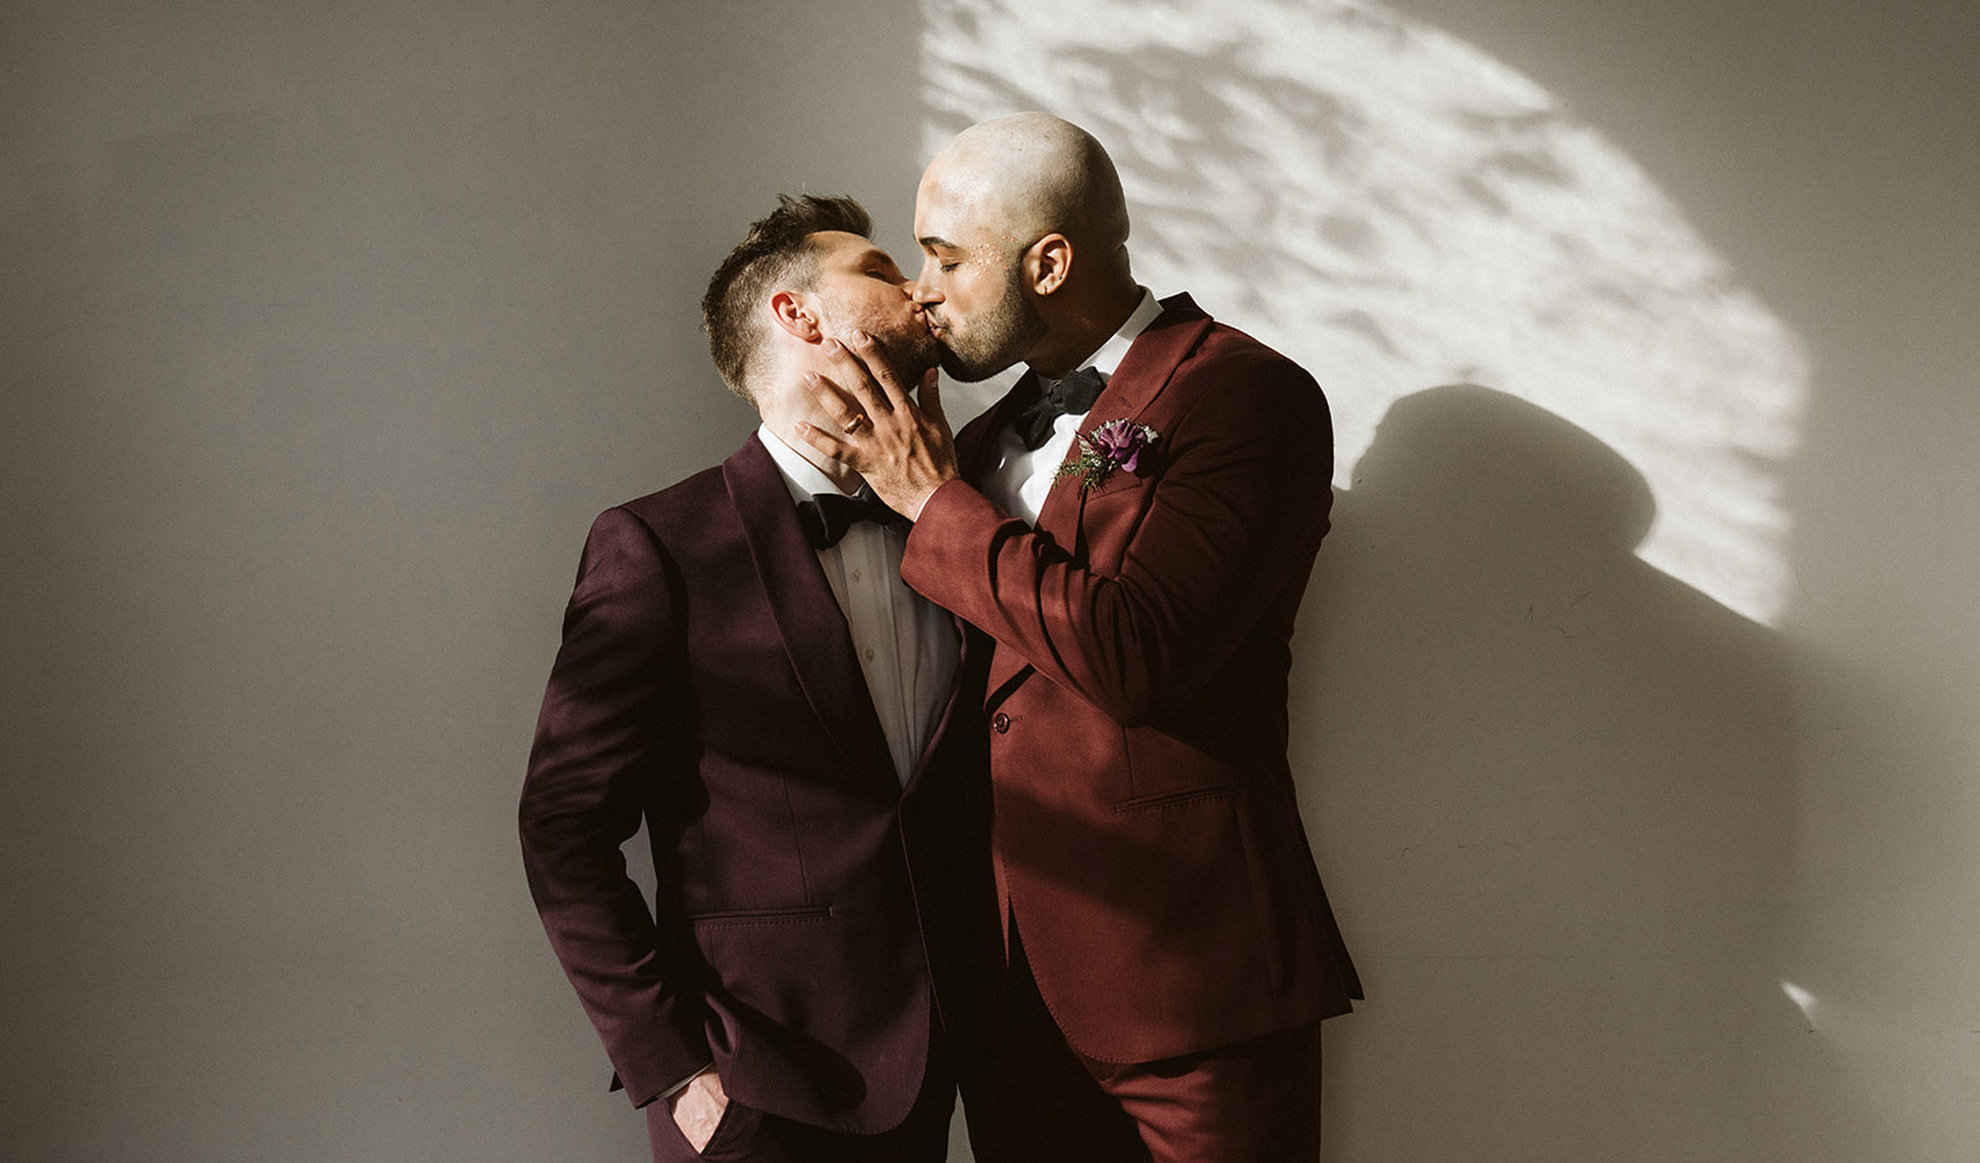 Rachel Brookstein Portland Oregon USA gay two grooms MR & MR wedding elopement Dancing With Them magazine